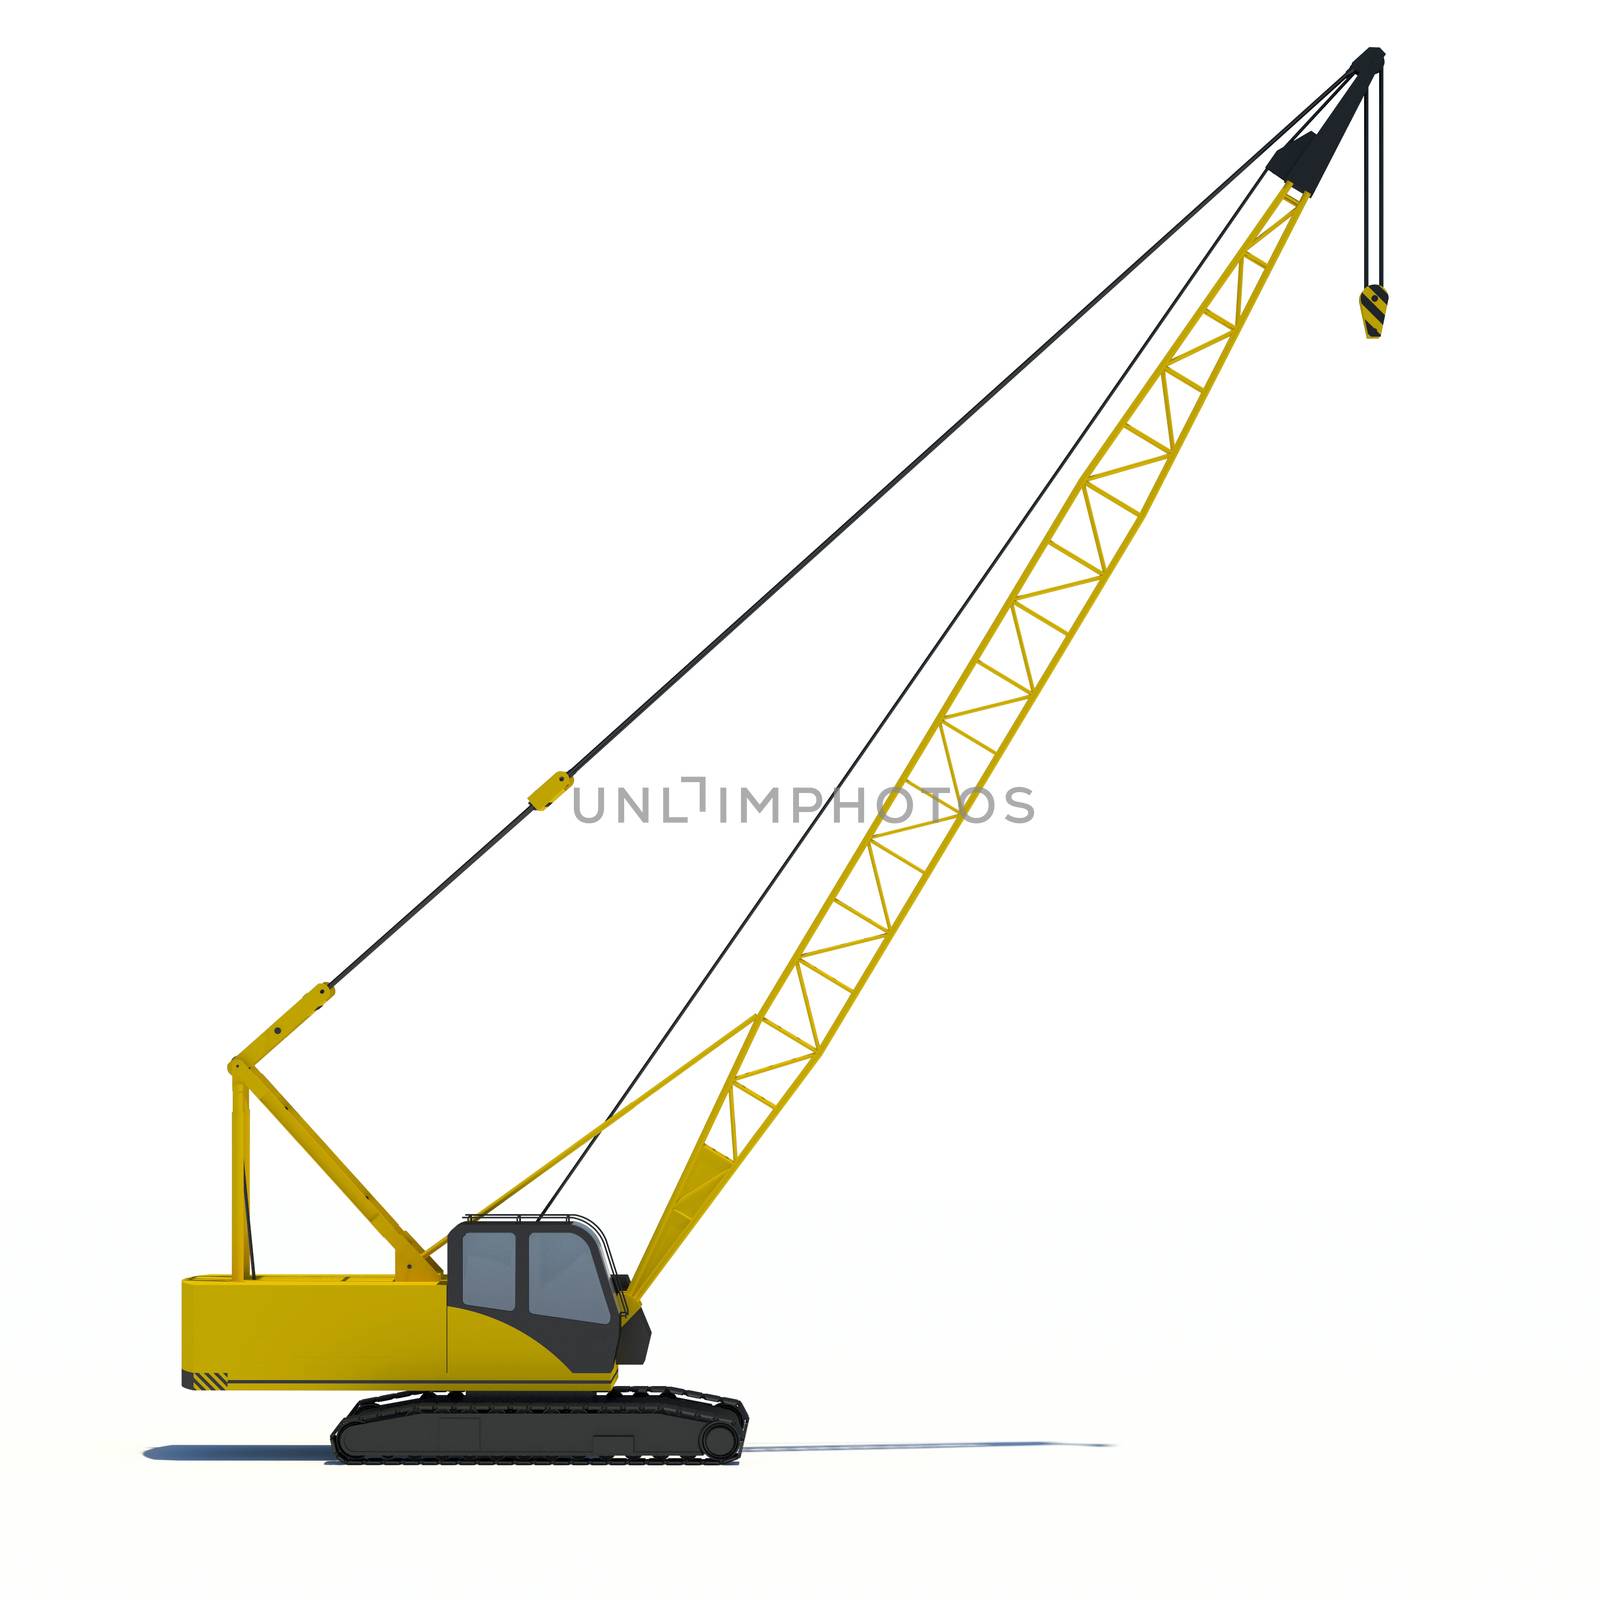 Crawler crane. Isolated render on a white background